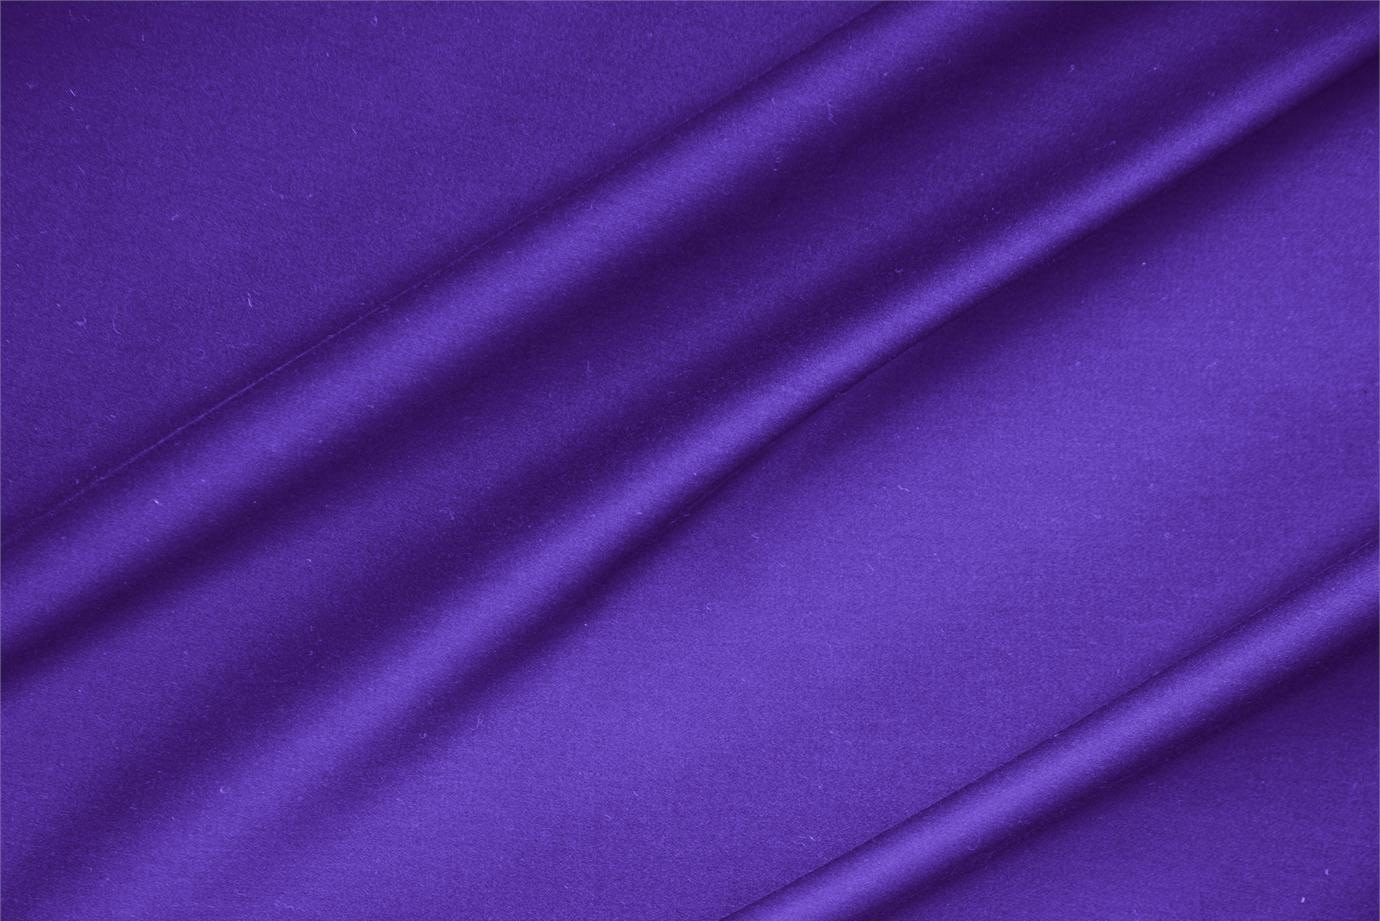 Iris Purple Cotton, Stretch Lightweight cotton sateen stretch fabric for dressmaking